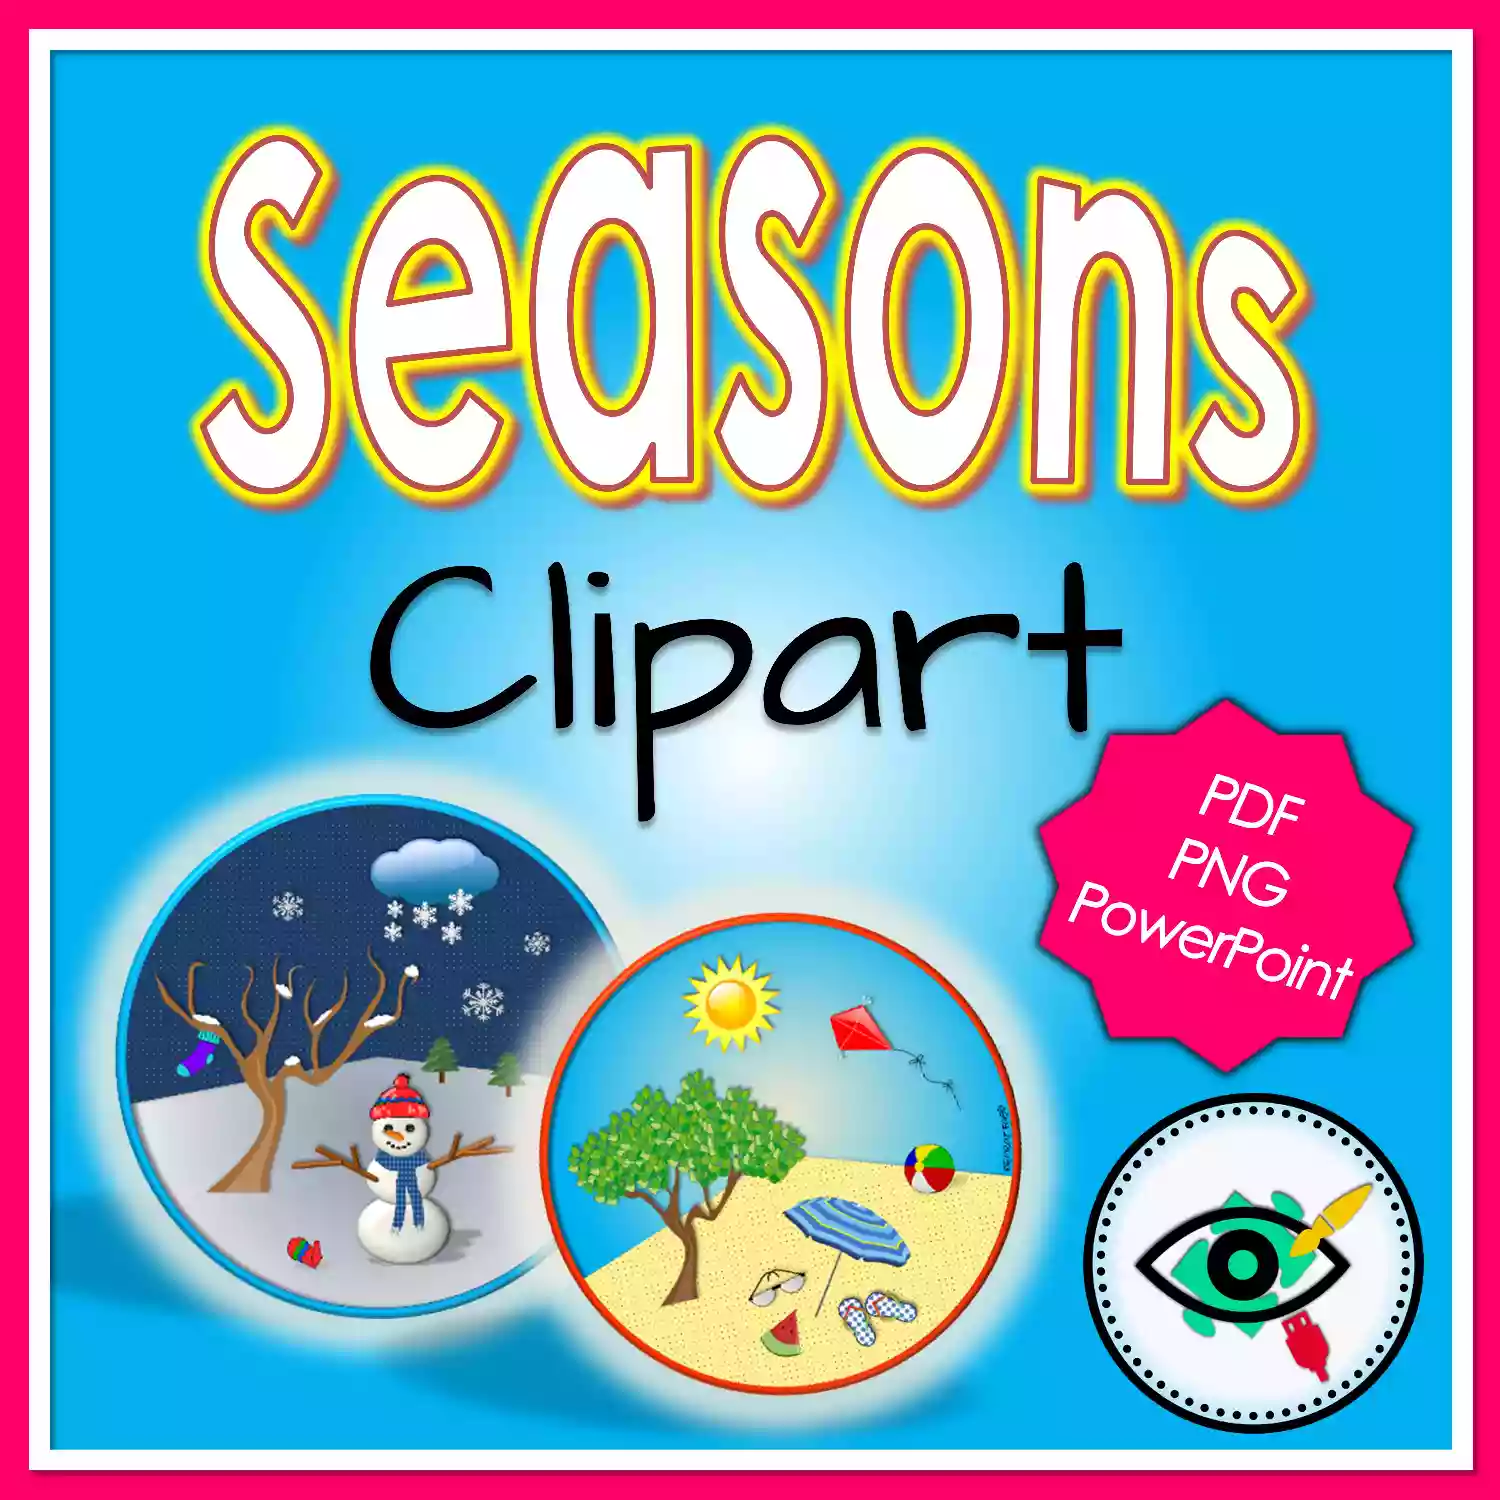 Four Seasons Clipart Planerium